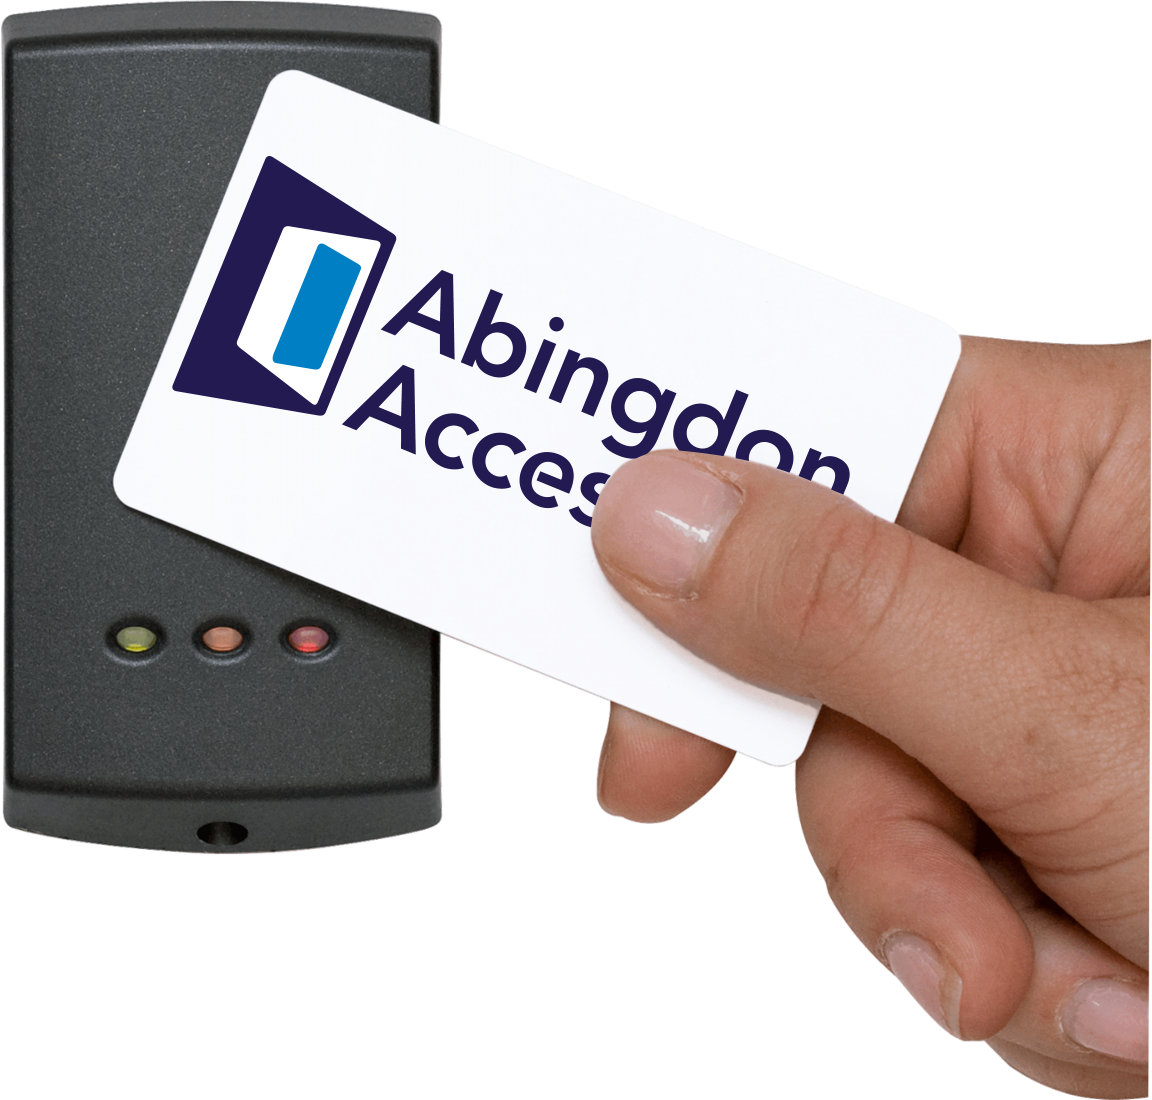 Abingdon Access Ltd